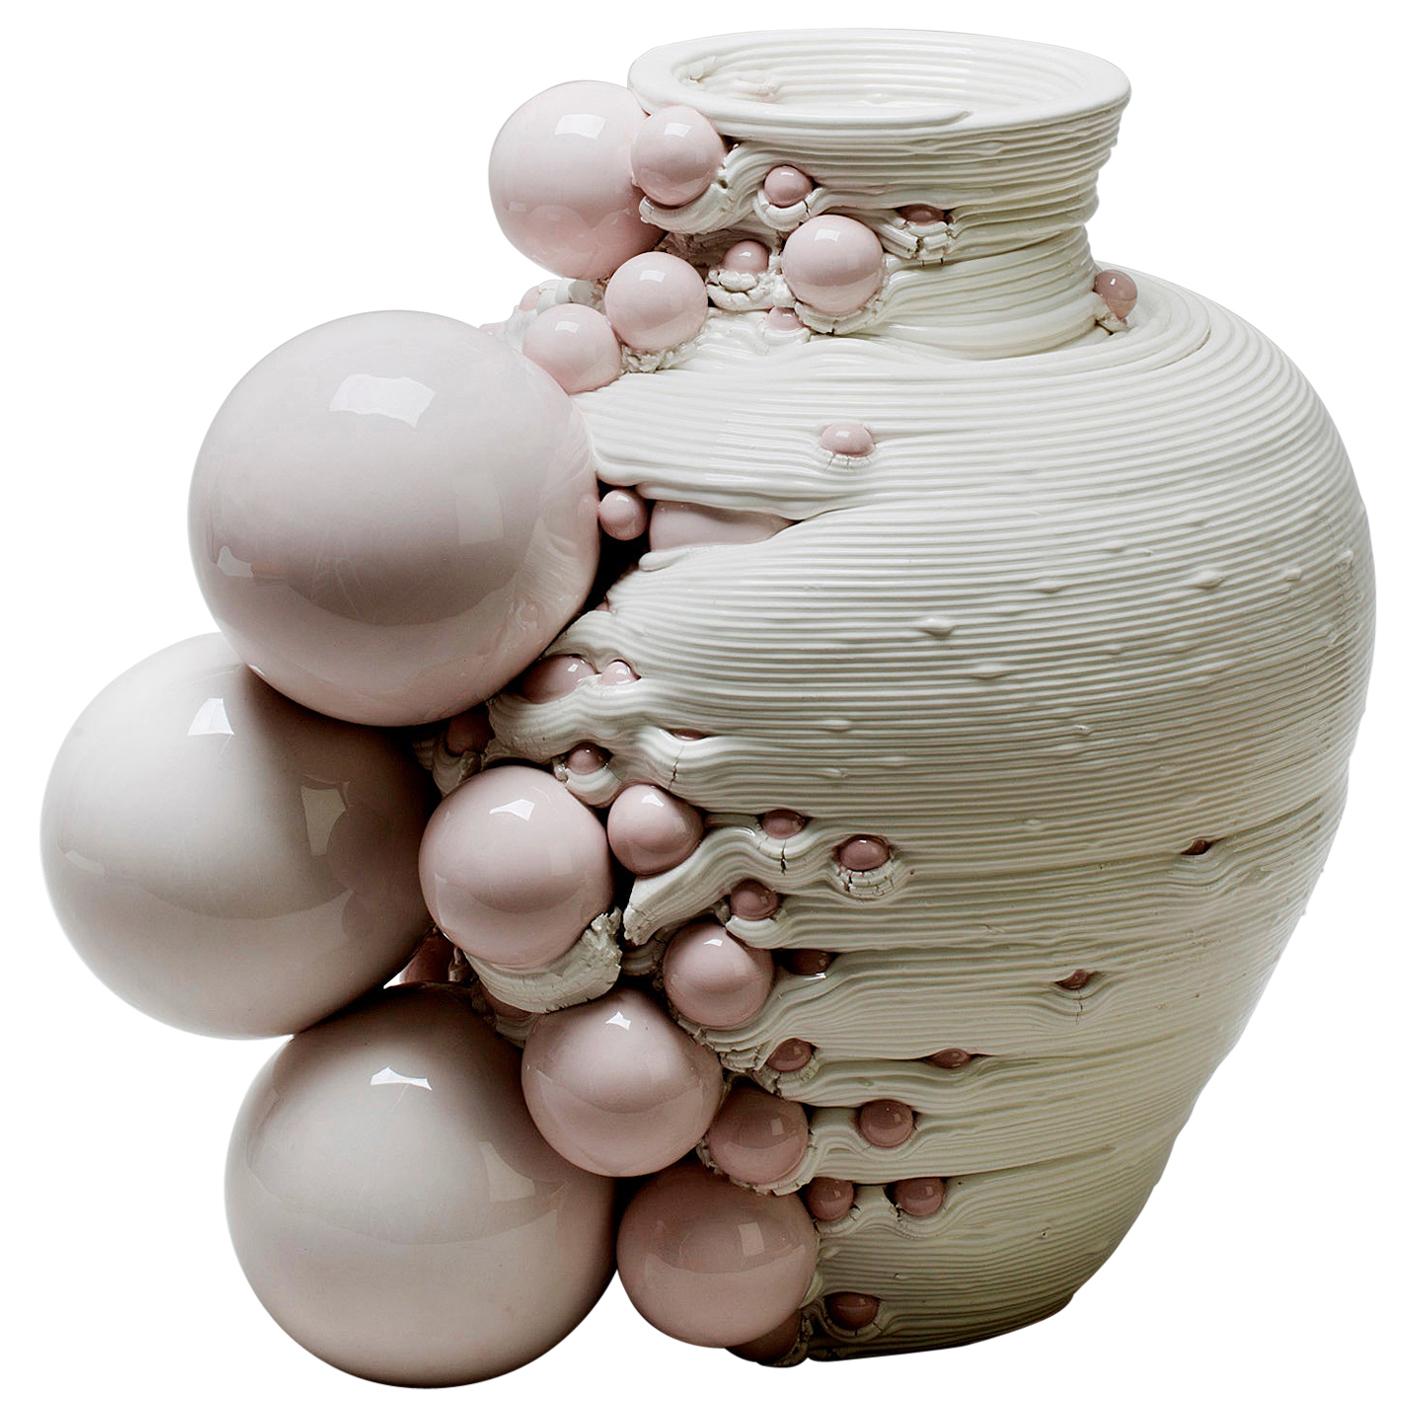 White 3D Printed Ceramic Sculptural Vase Italy Contemporary, 21st Century